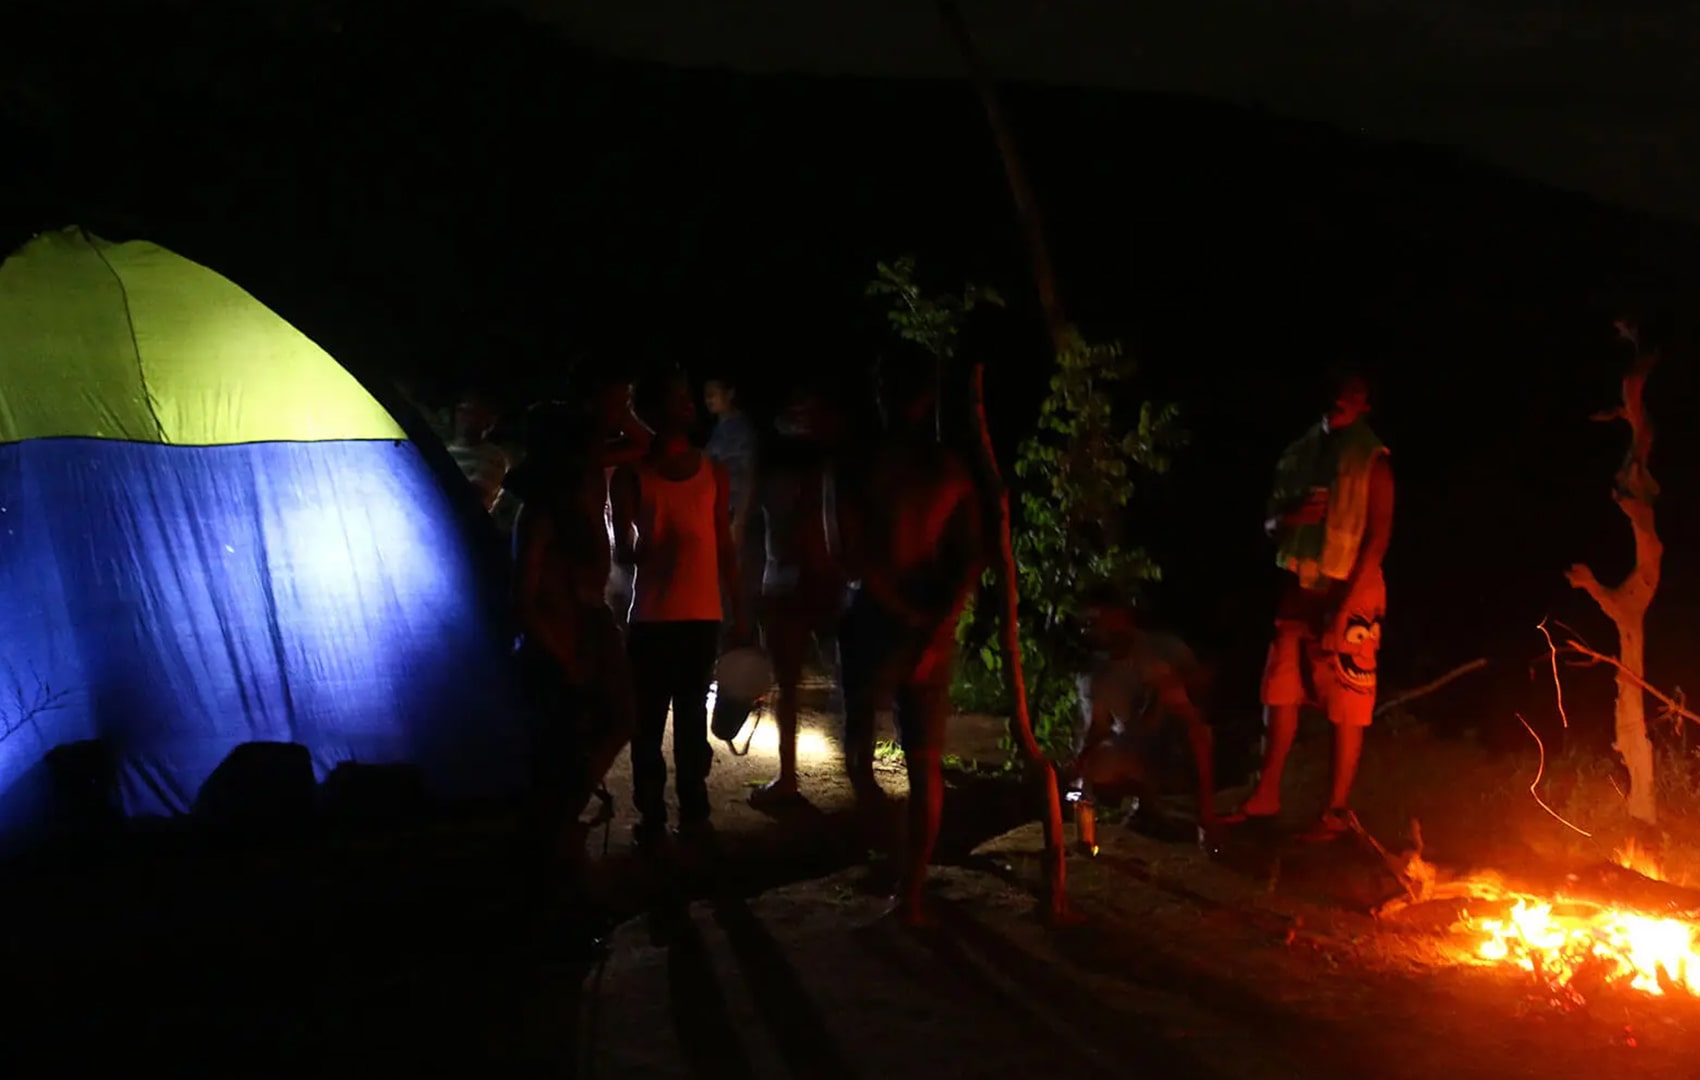 night camping meemure